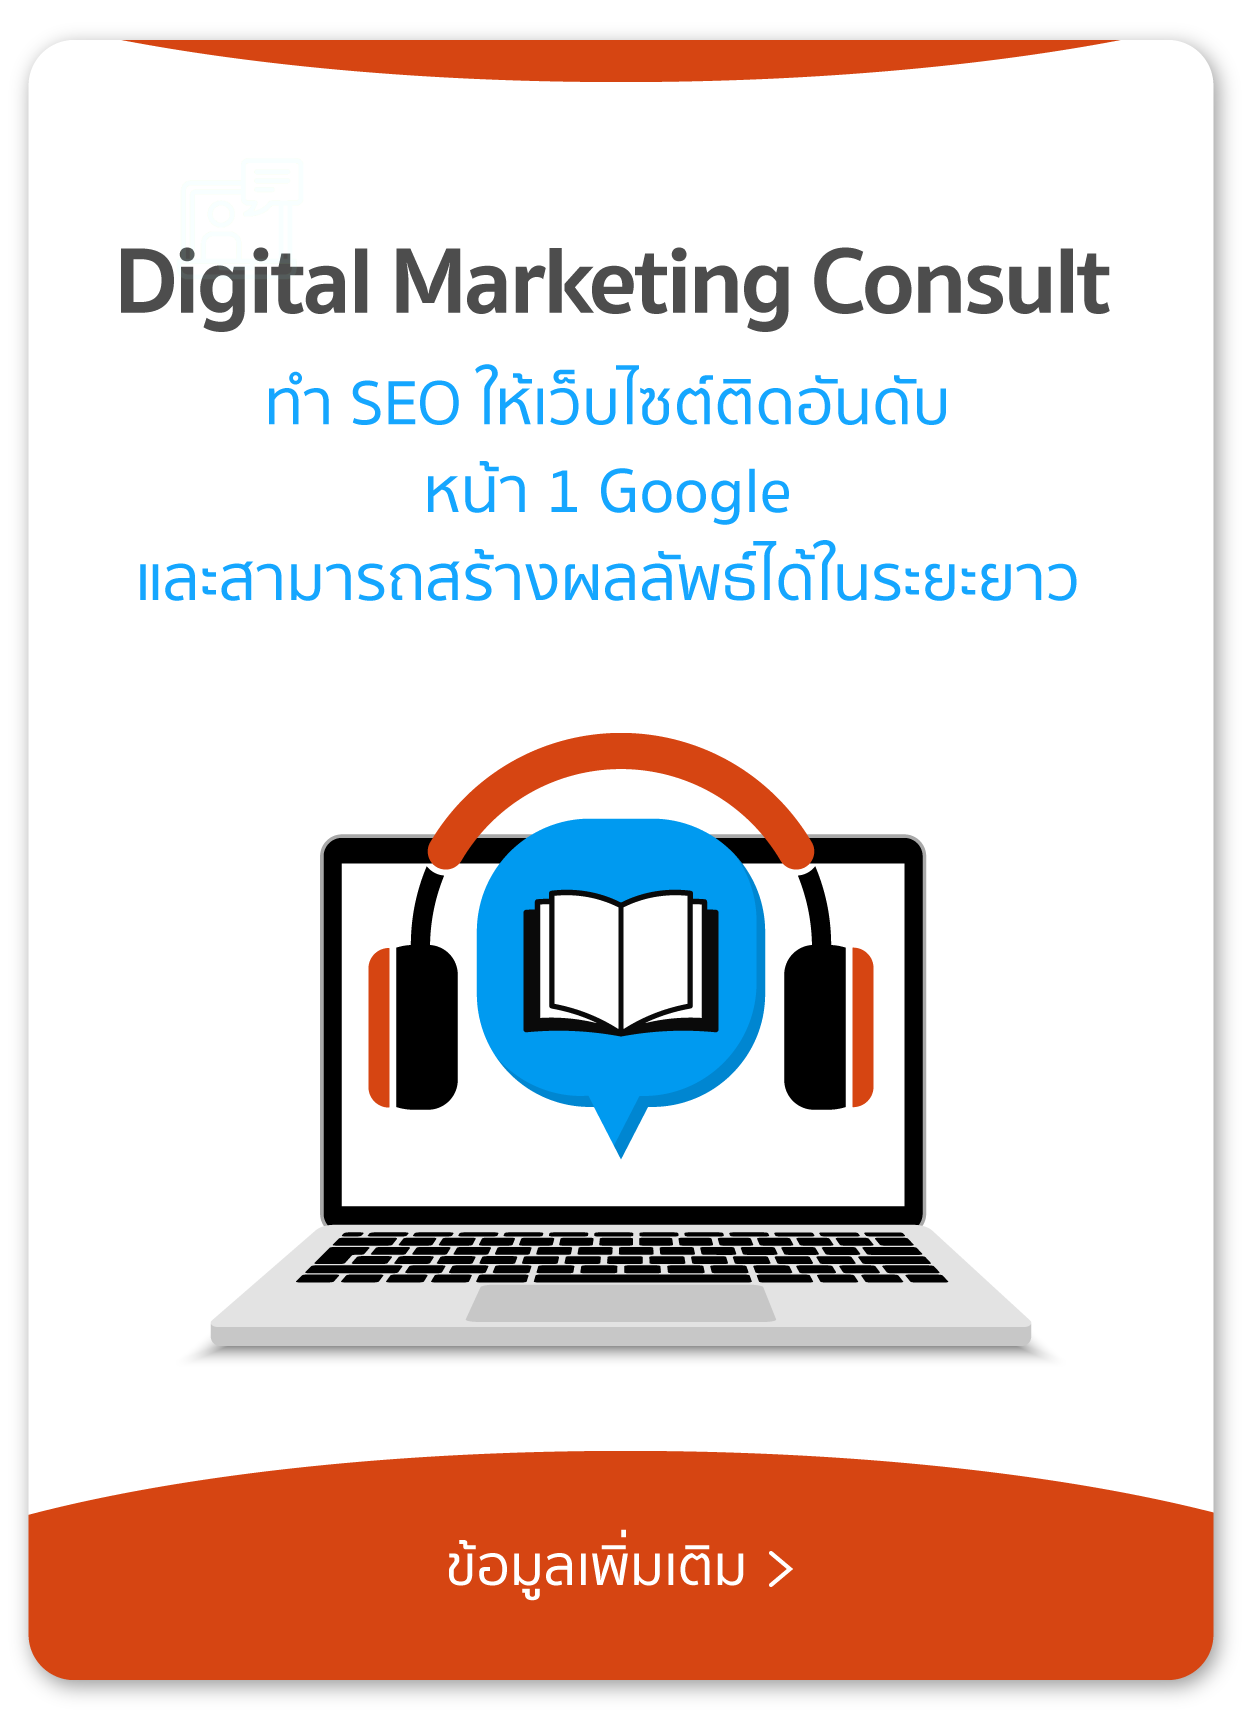 digitak marketing consult